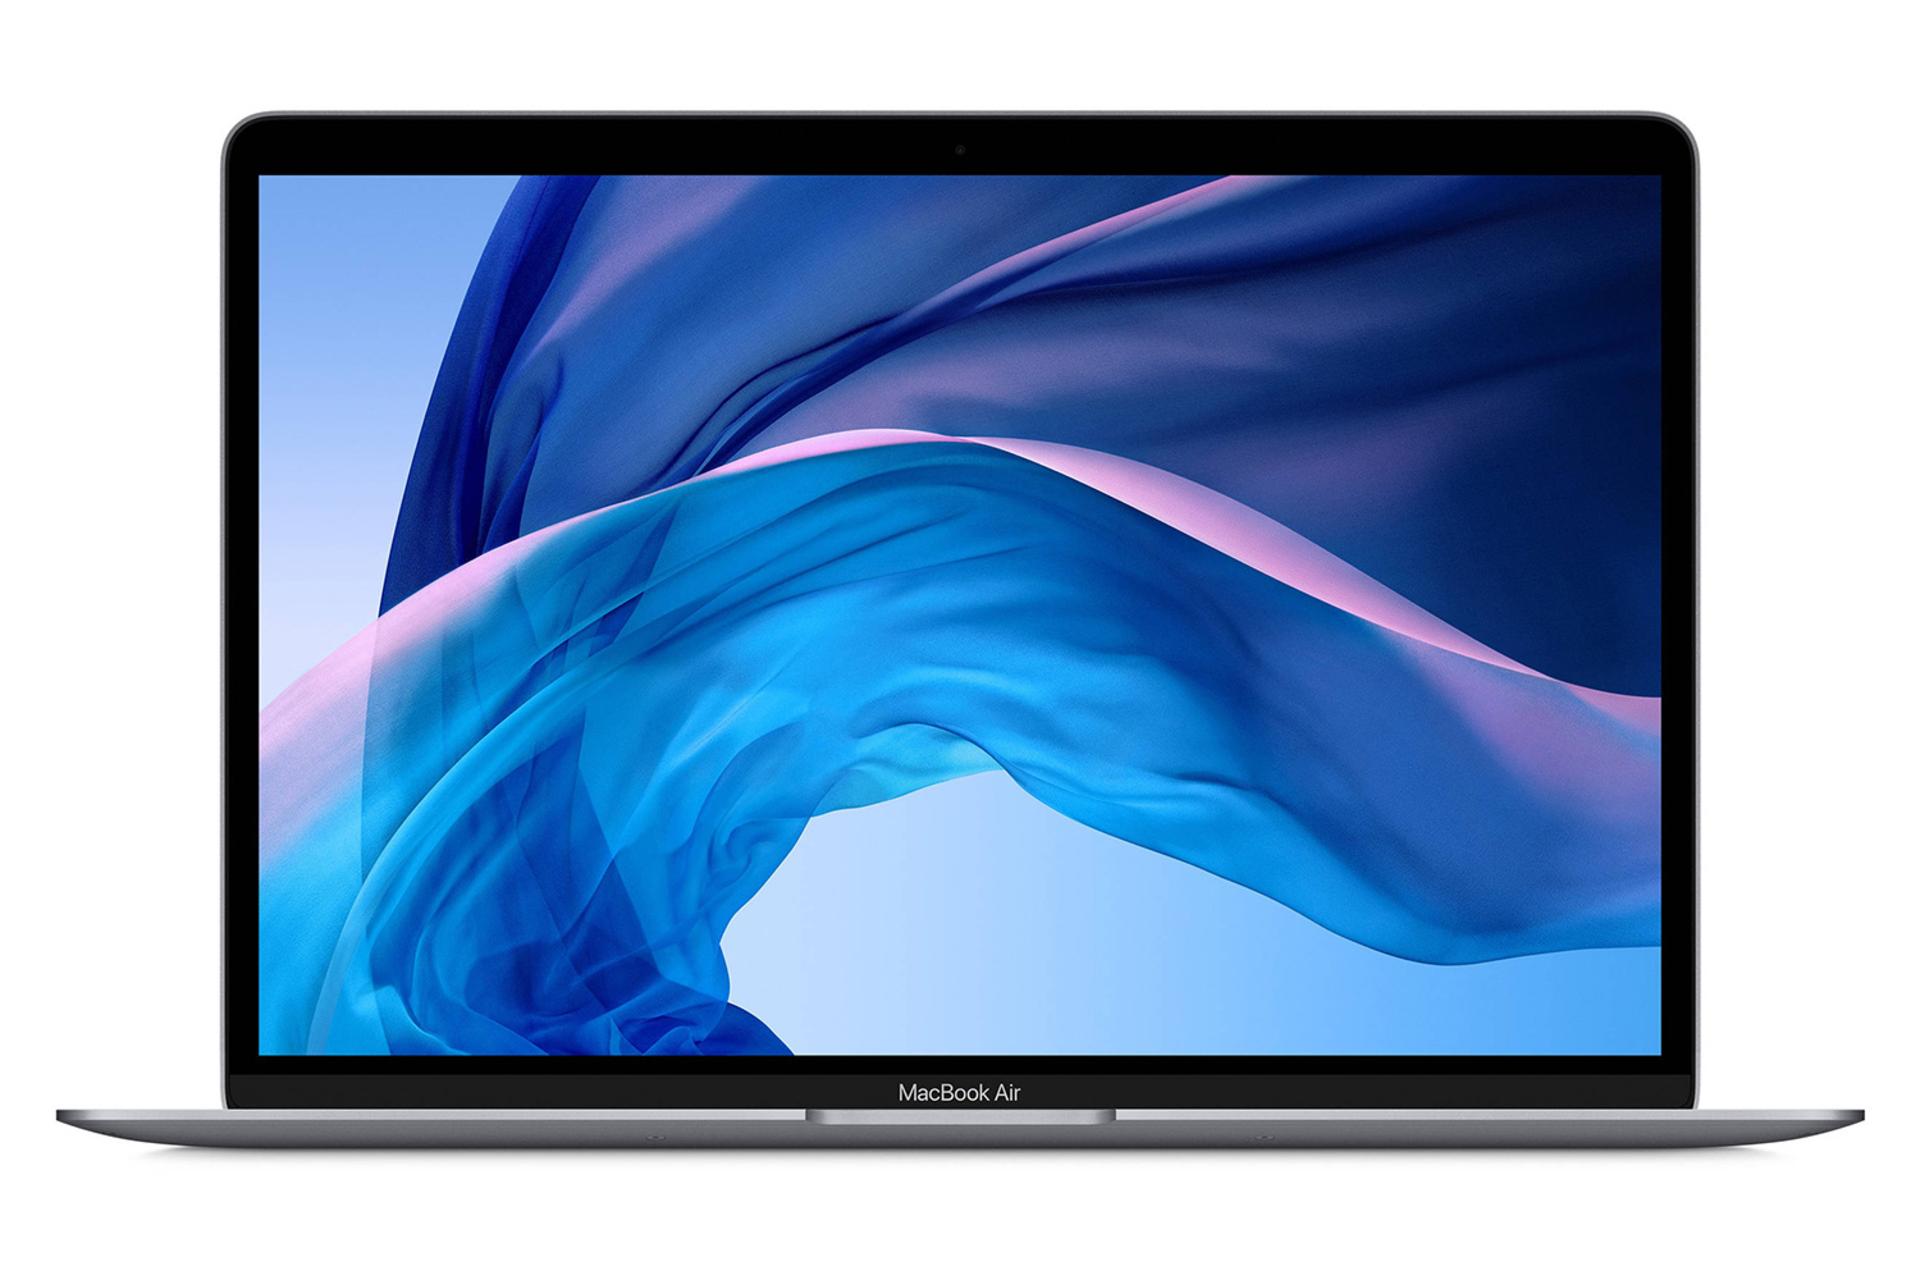 لپ تاپ مک بوک ایر 13 اینچی 2020 اپل / Apple MacBook Air 13 2020